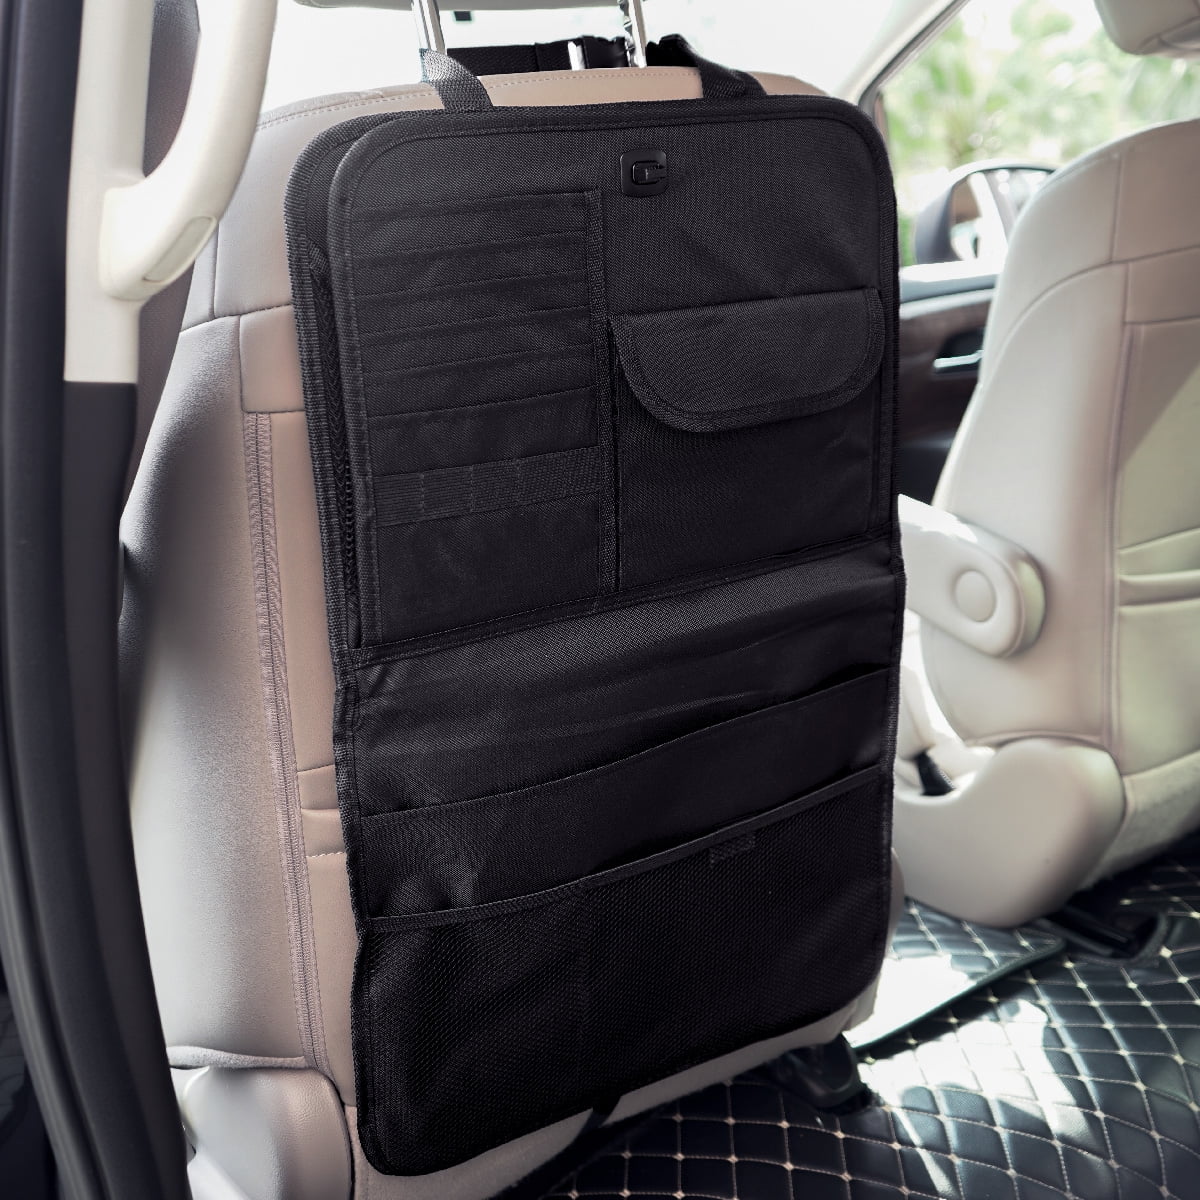 Car Back Seat Organiser Auto Travel Multi-Pocket Holder Pouch Storage Bag Black 